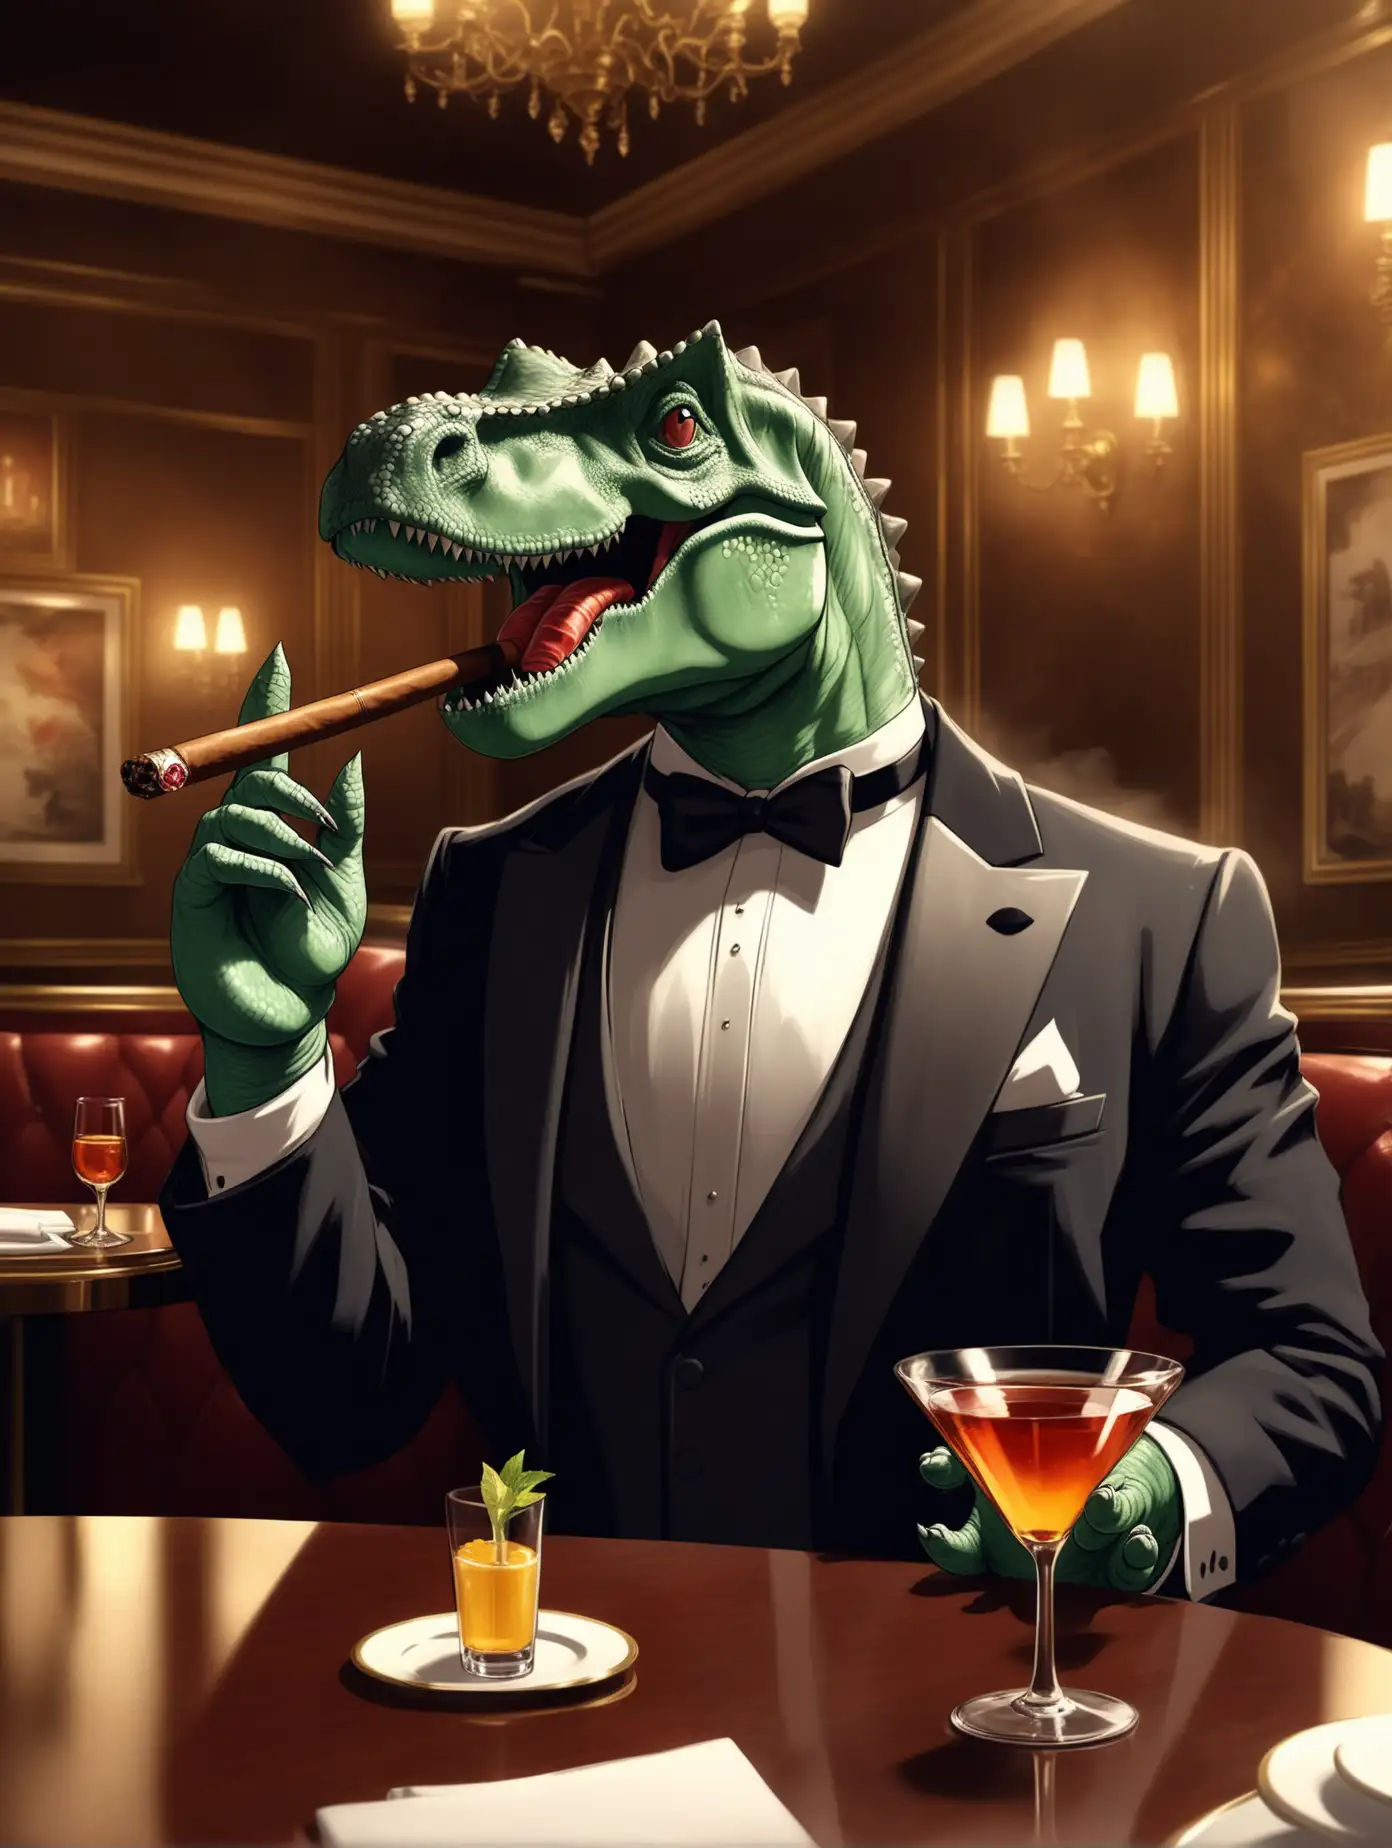 Sophisticated Dinosaur Enjoying a Cigar and Drink in a Stylish Restaurant